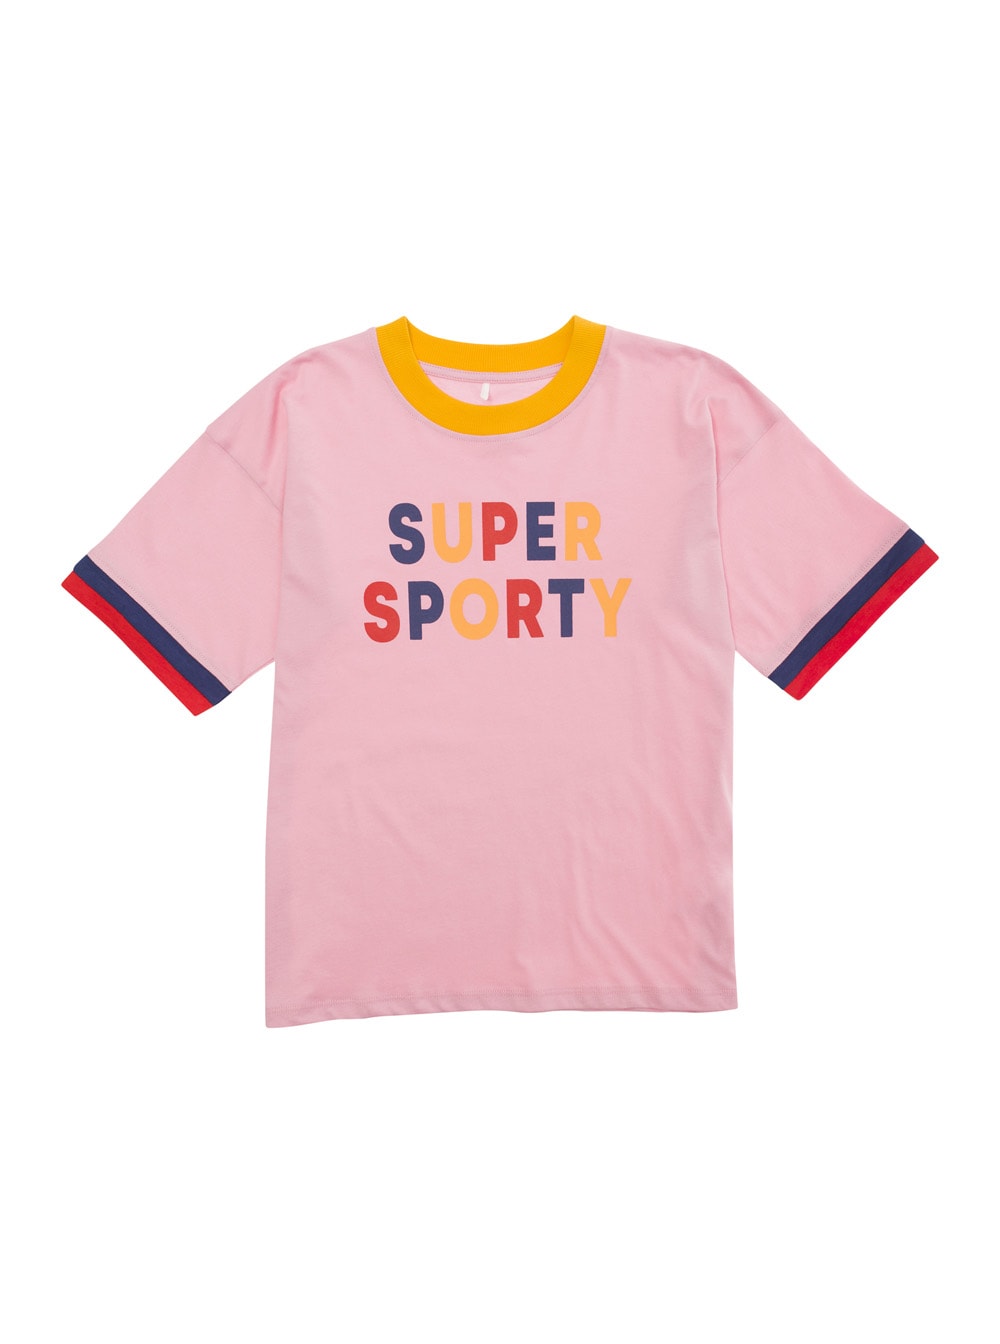 Mini Rodini Kids' Super Sporty T-shirt In Pink